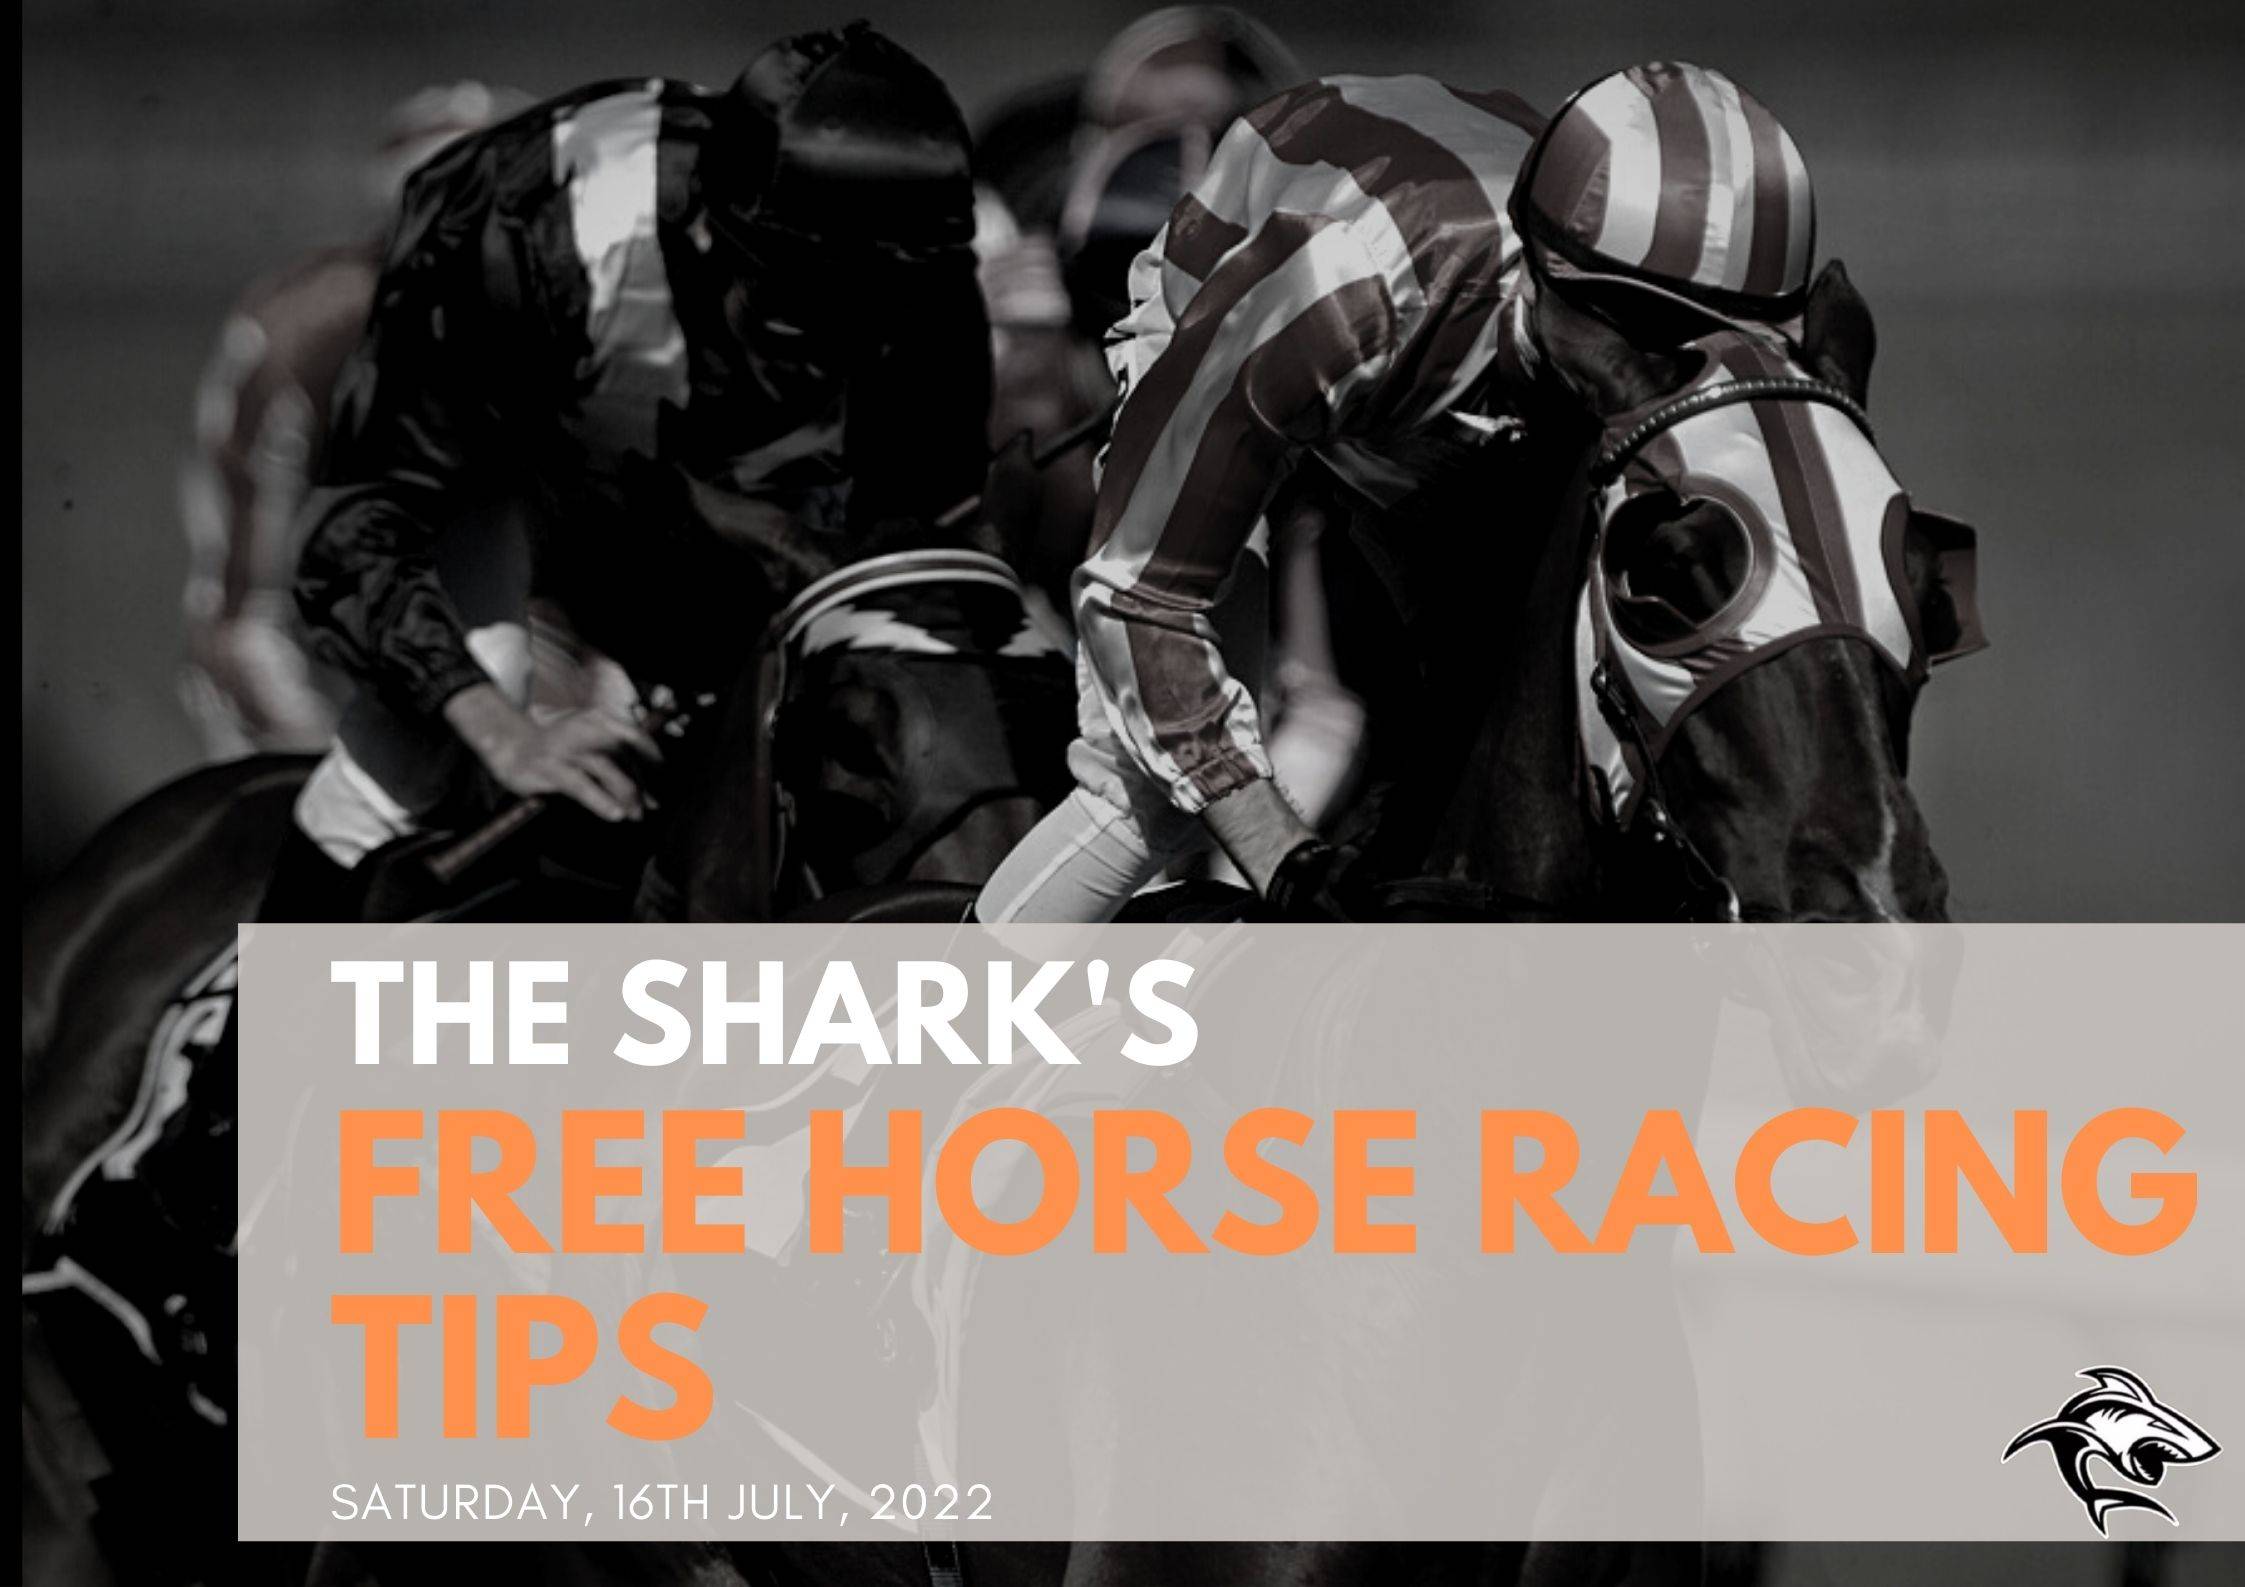 Free Horse Racing Tips - 16th Jul